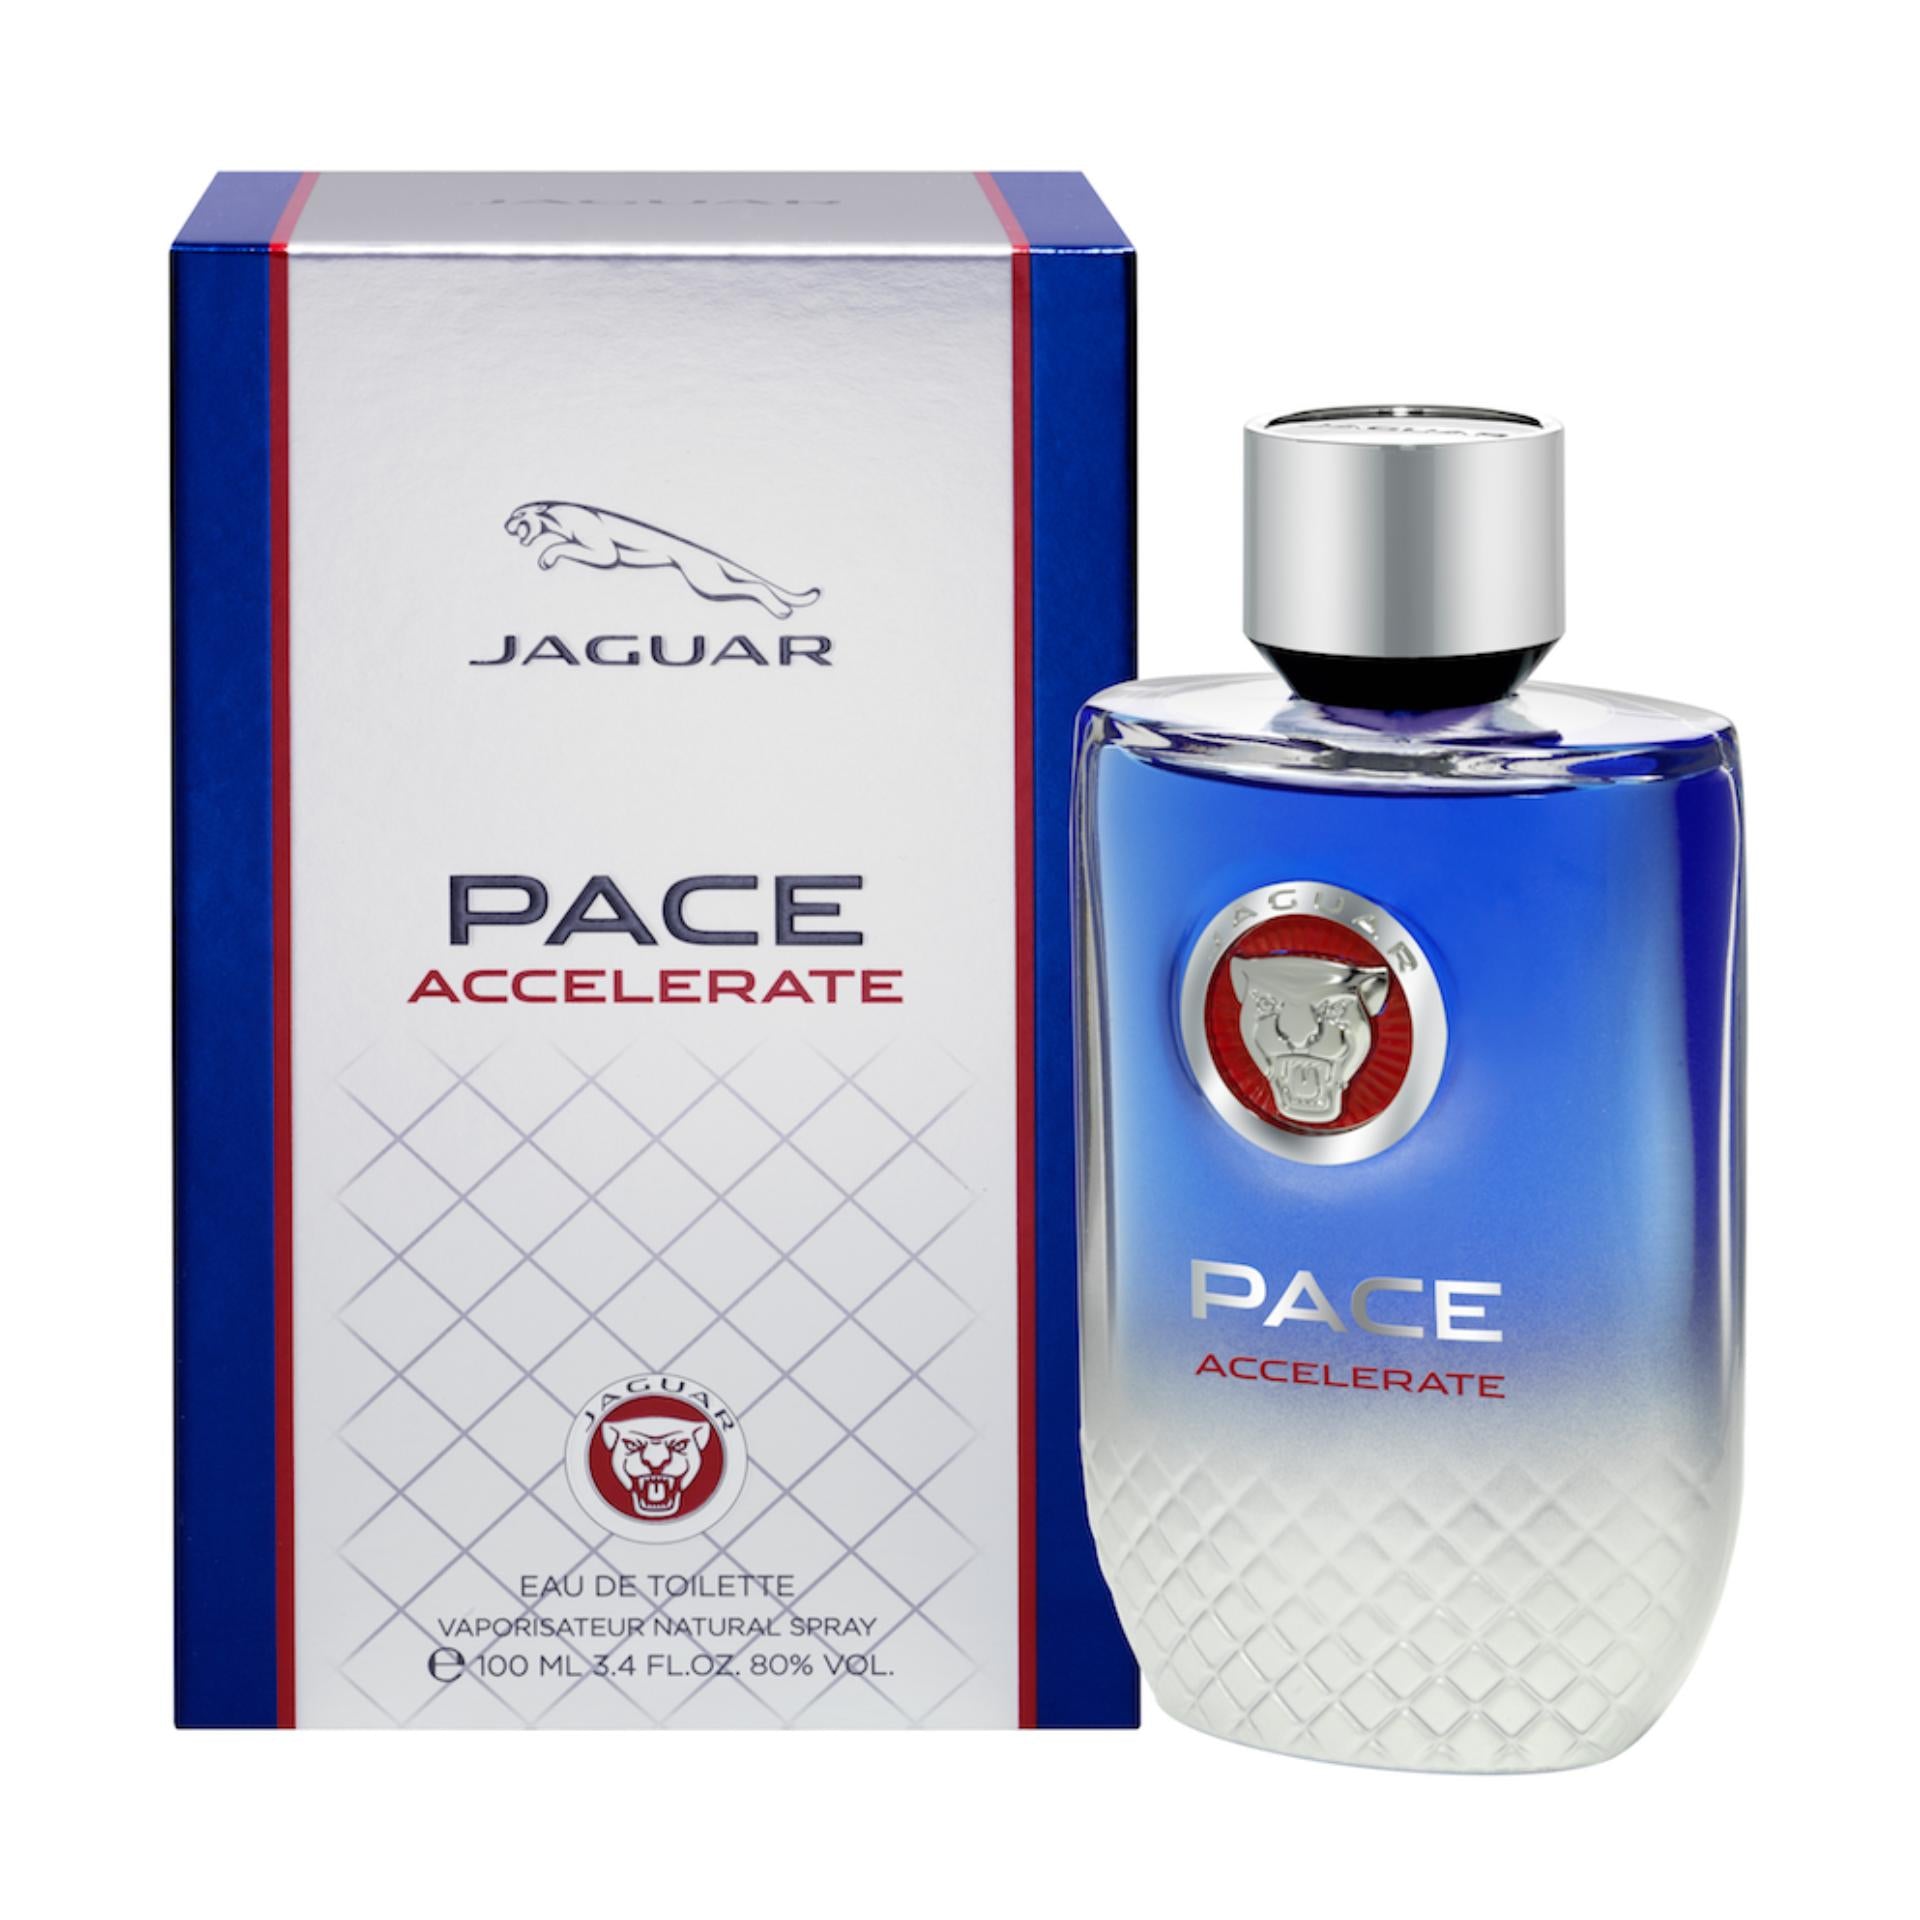 Jaguar Pace Accelerate Men Edt 100Ml - Highfy.pk